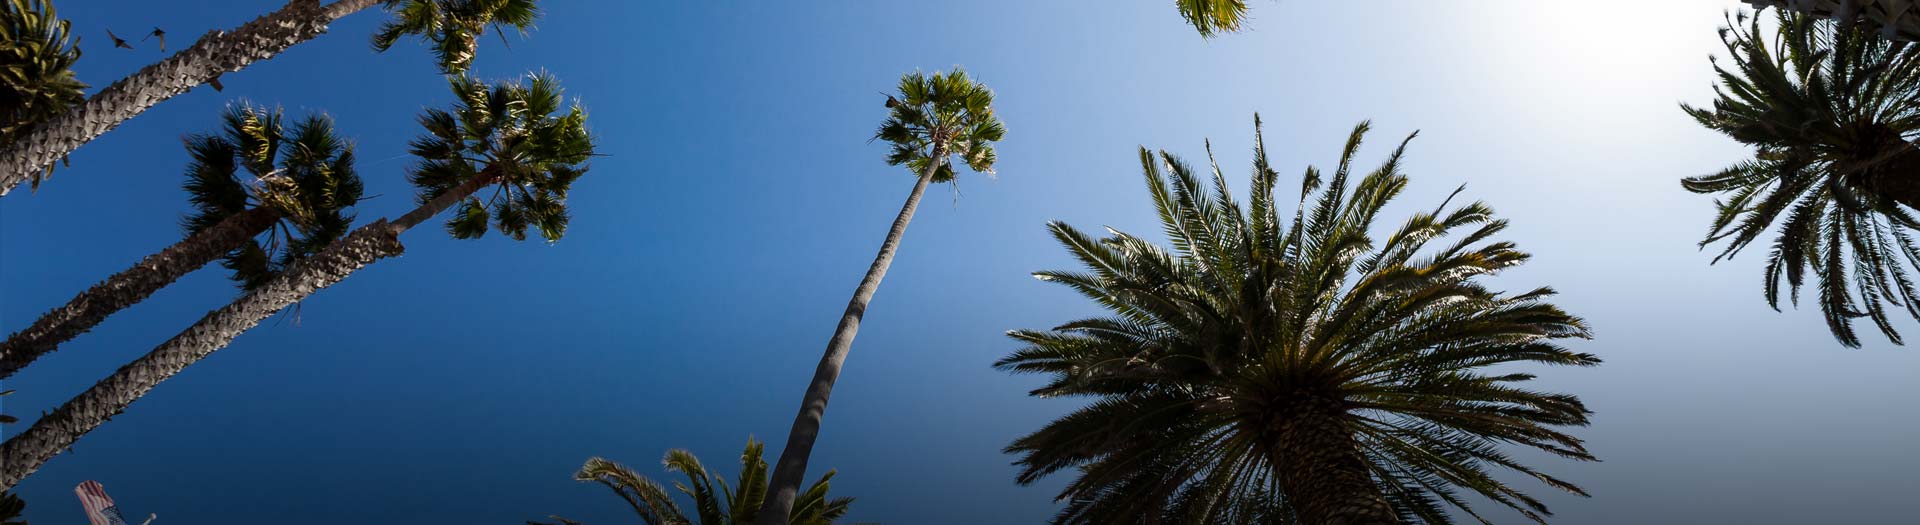 San Diego palm trees against a blue sky